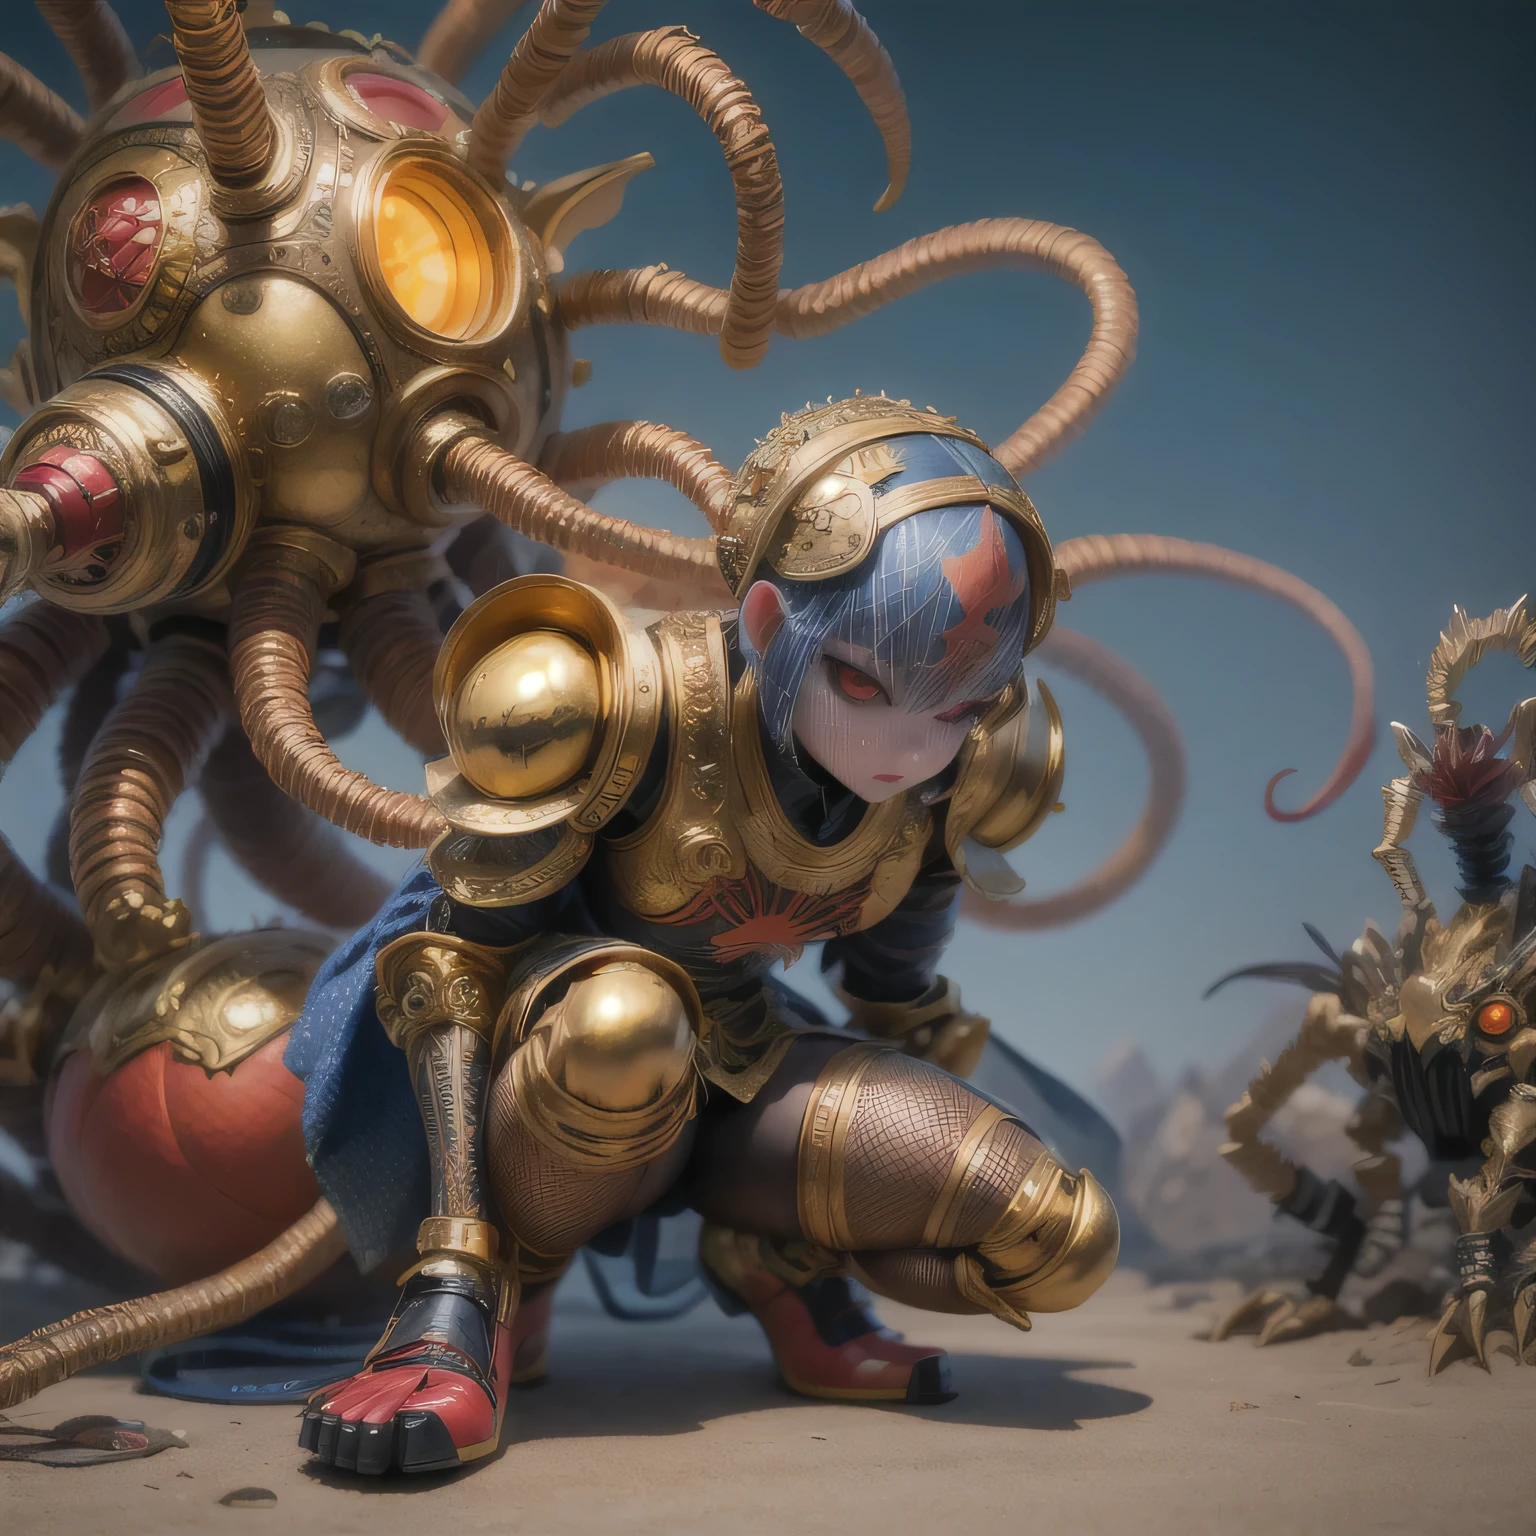 a close up of a golden 거미 with a 阳春翡翠 body and legs, steampunk 거미, Mechanical 거미 red and cobalt blue legs, 거미류, 헐떡거리다, 아라크네, 거미, 스팀펑크 로봇 전갈, 매우 상세한 바로우 8k, 밝은 주황색 다리가 큼, 금으로 만든 조각품, 제작: Hiroyuki Tajima, full samurai armor 거미man, giger 거미 joker, 곤충류의，（（（퇴화기 ）））